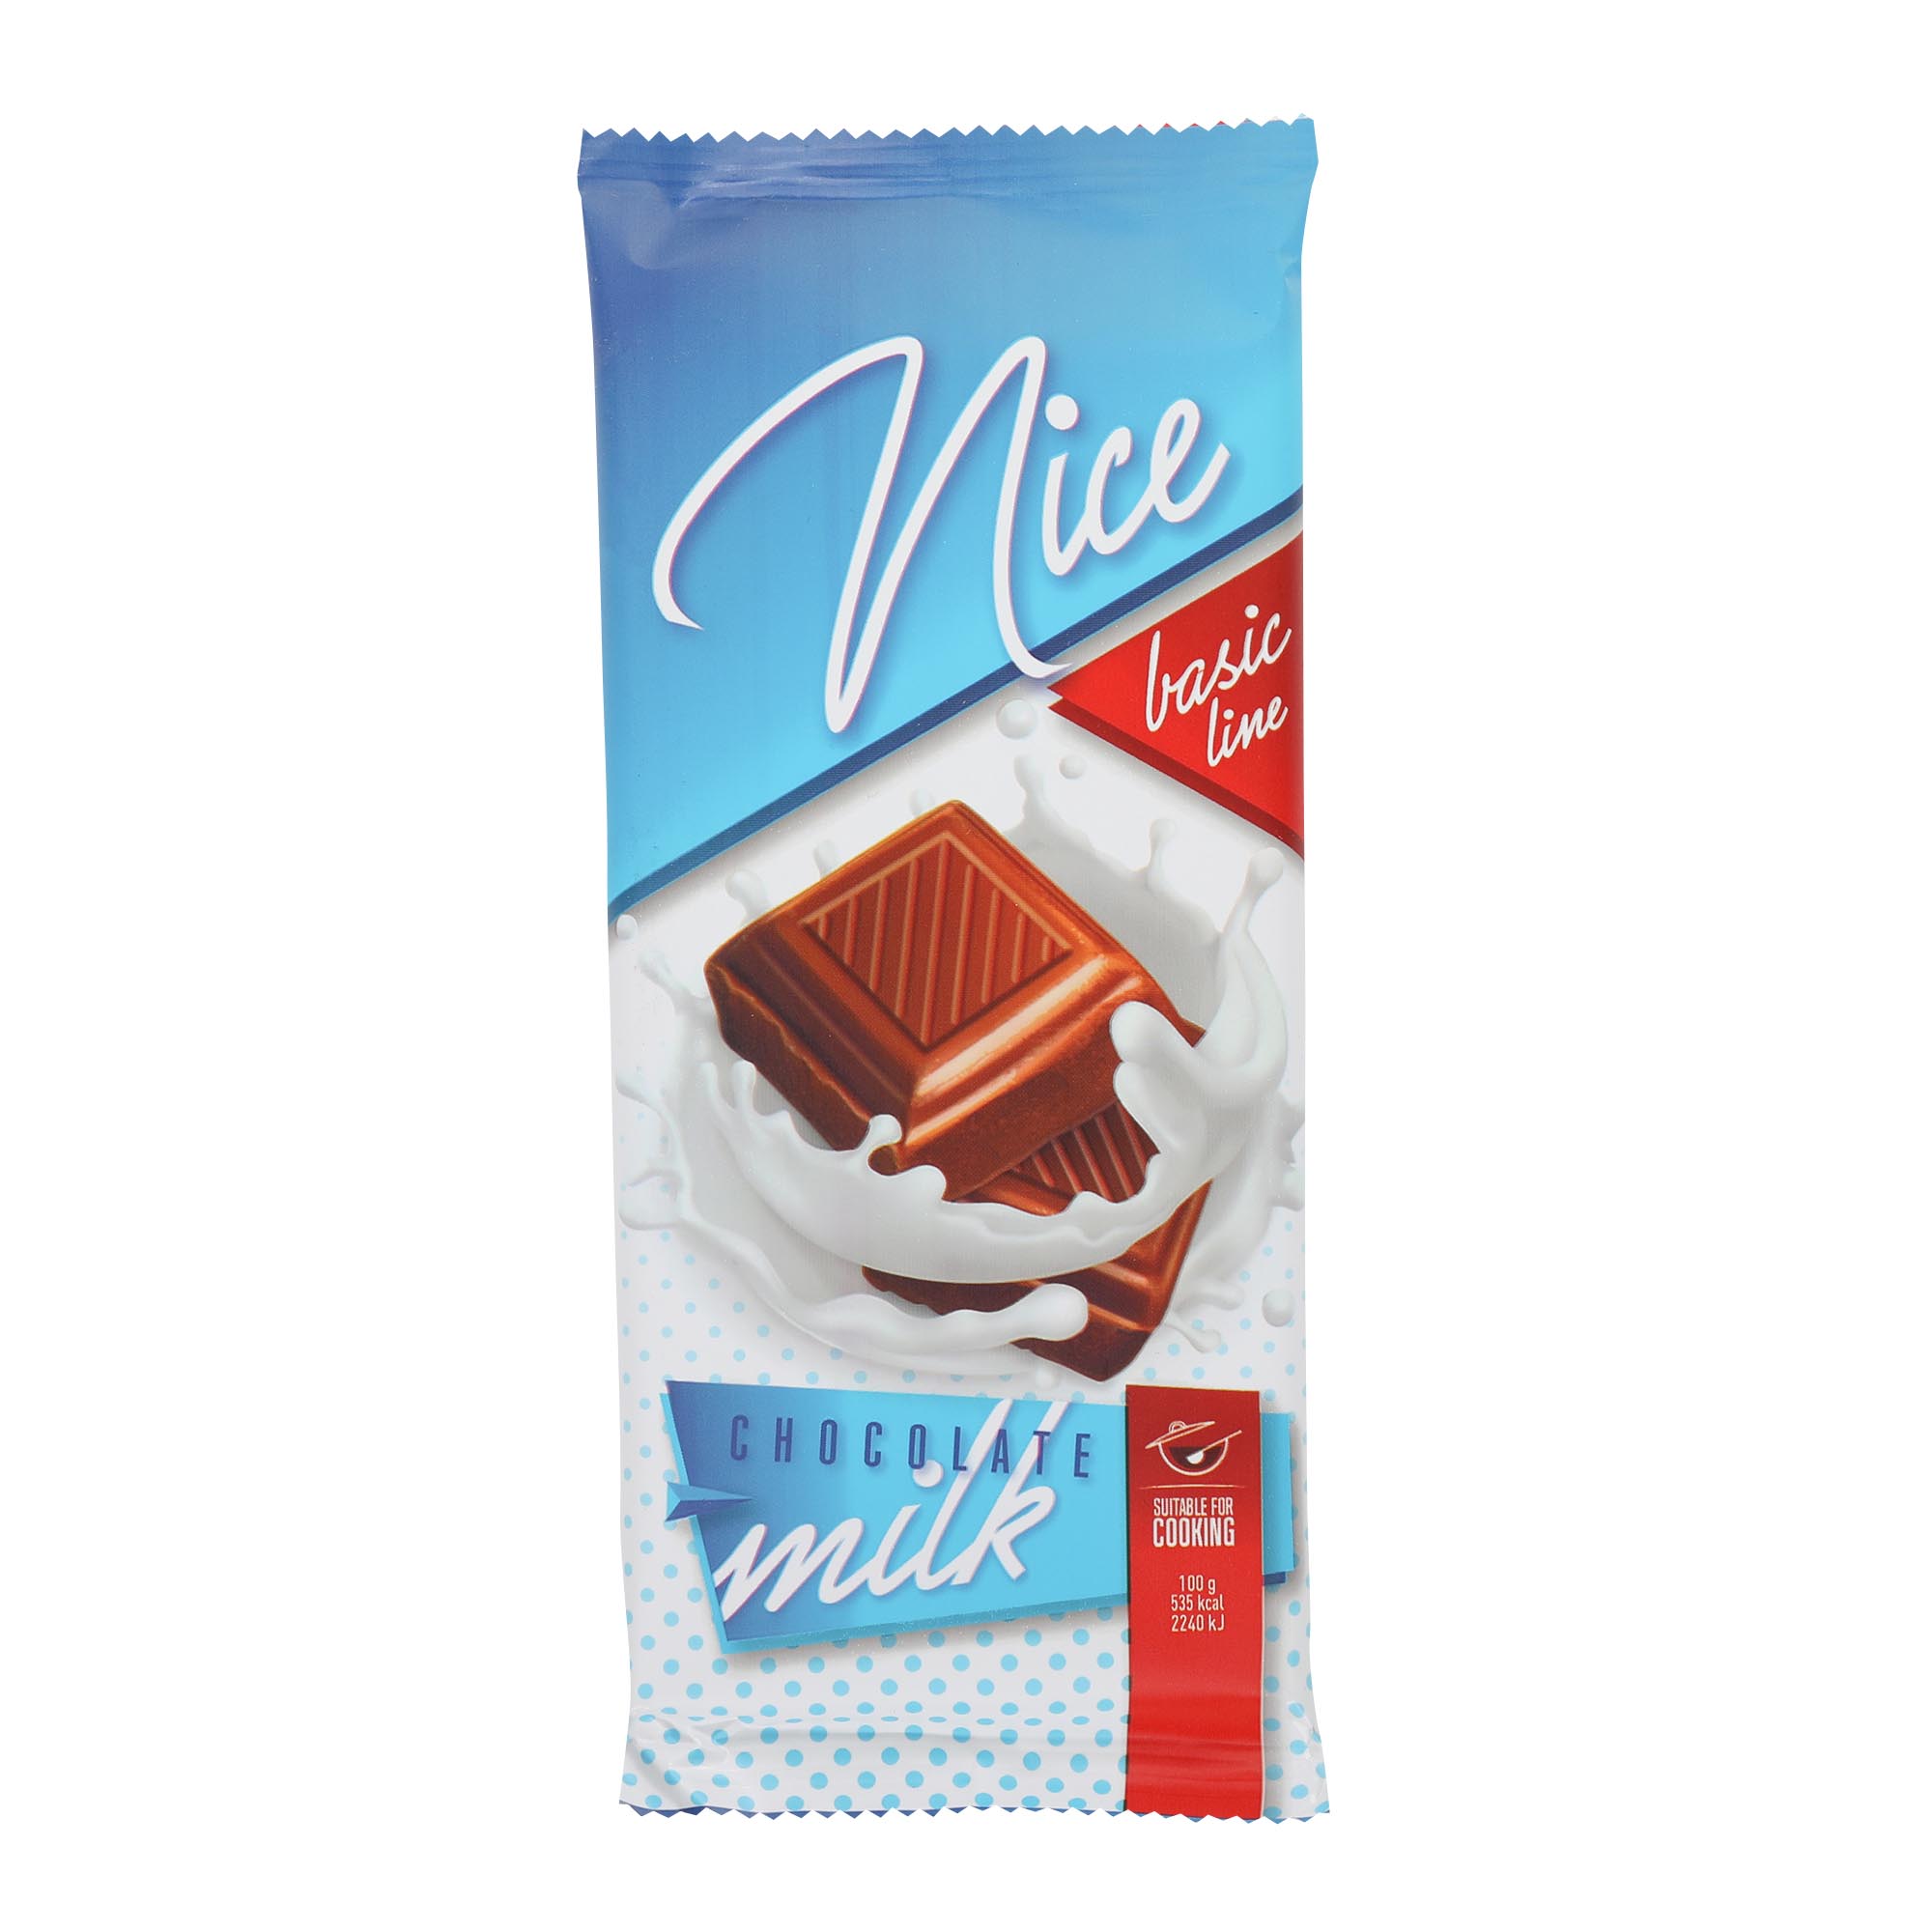 Шоколад молочный Chocomoco Nice 80 г шоколад победа вкуса max energy молочный 36% какао без сахара 100 гр